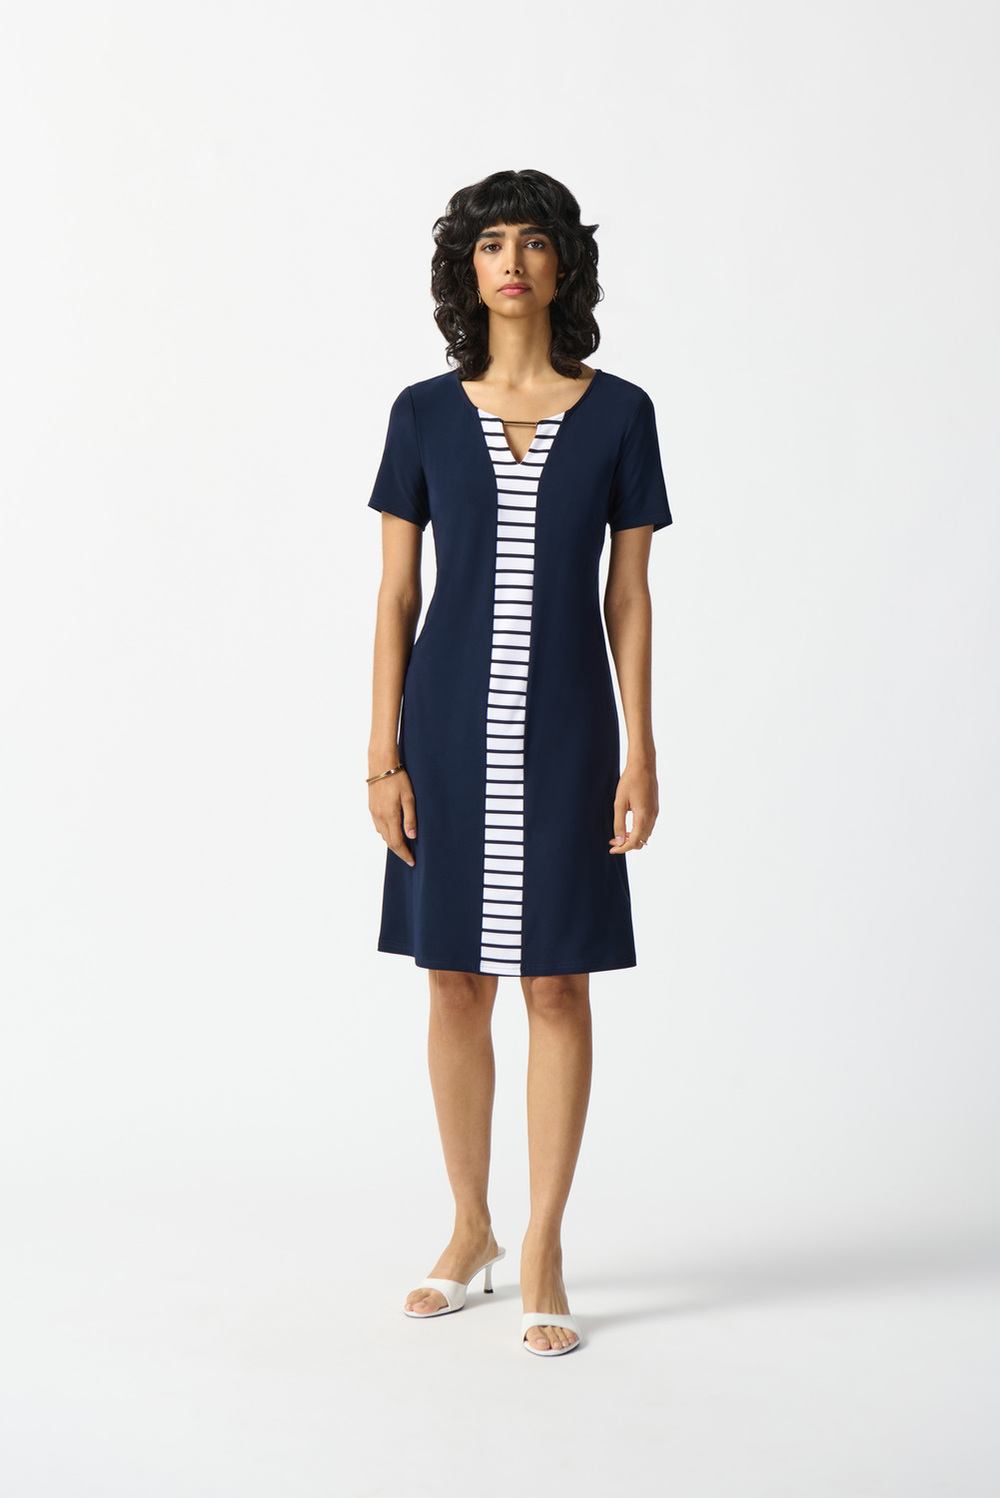 Striped Panel Dress Style 242068. Midnight Blue/vanilla